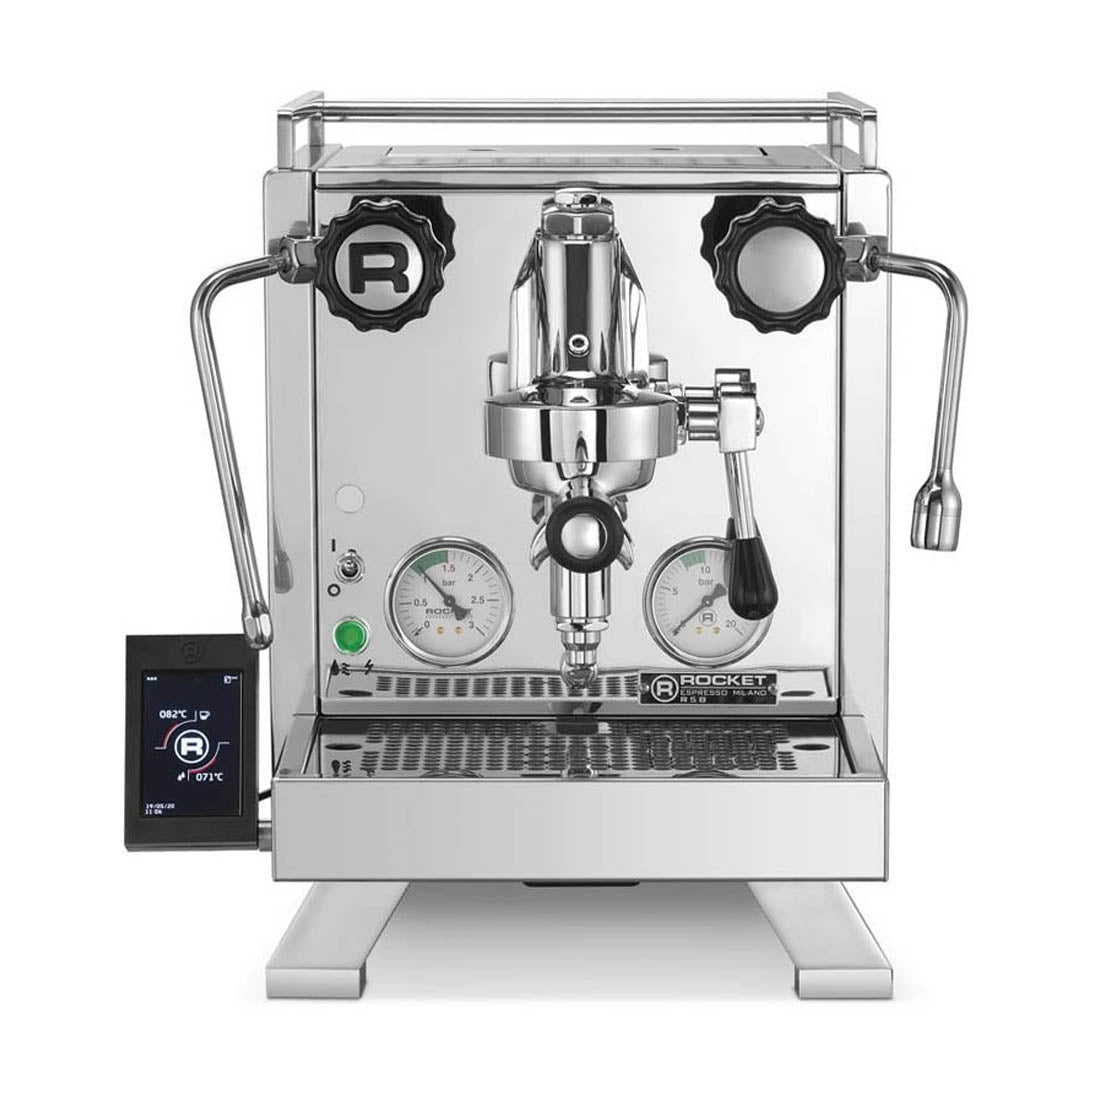 R Cinquantotto Espresso machine